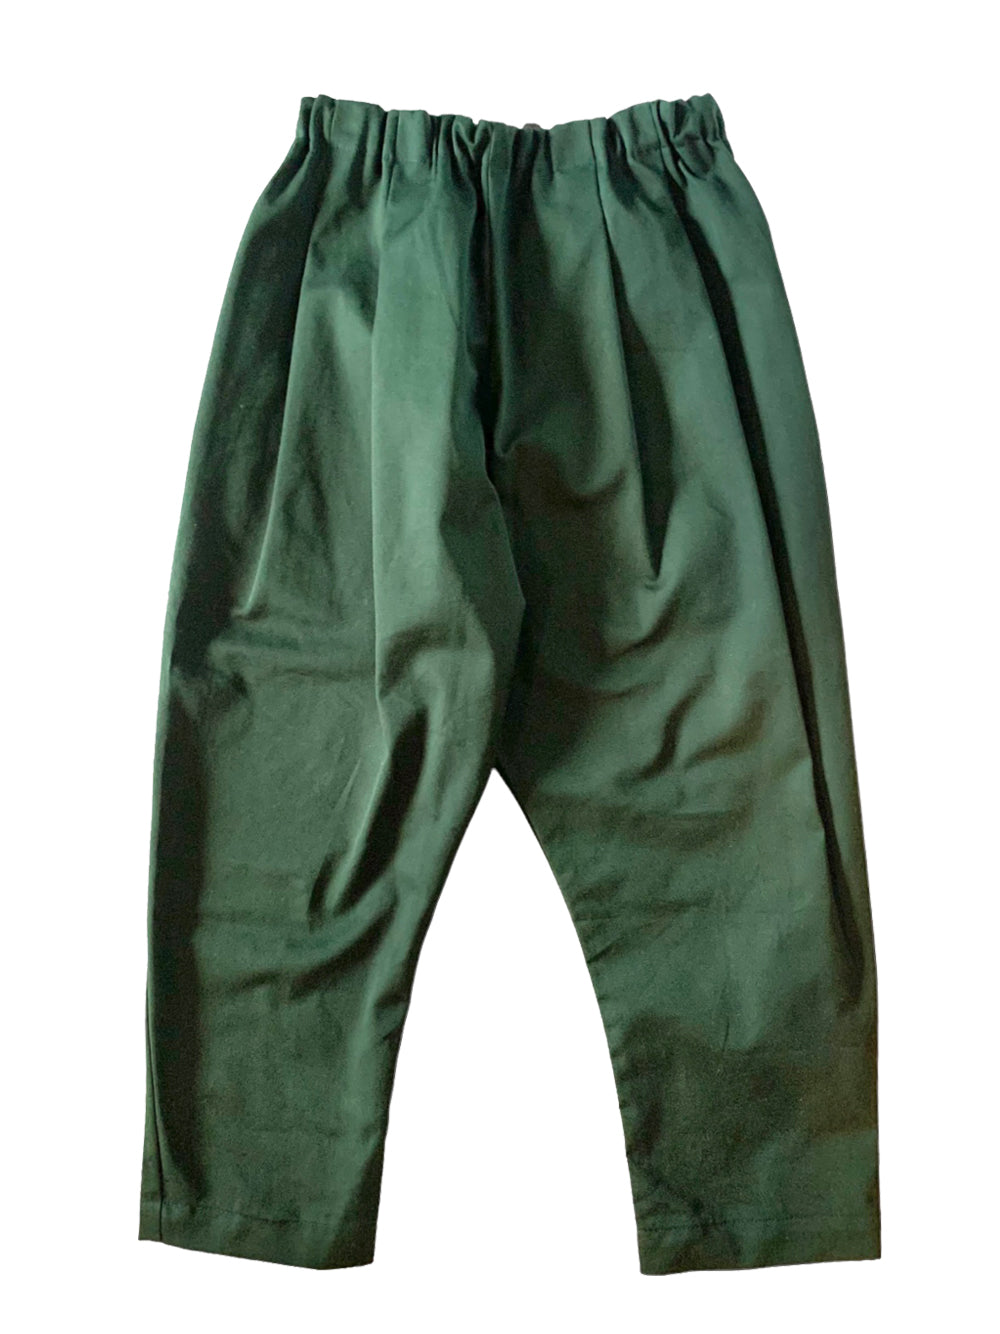 Green Tuck Pants